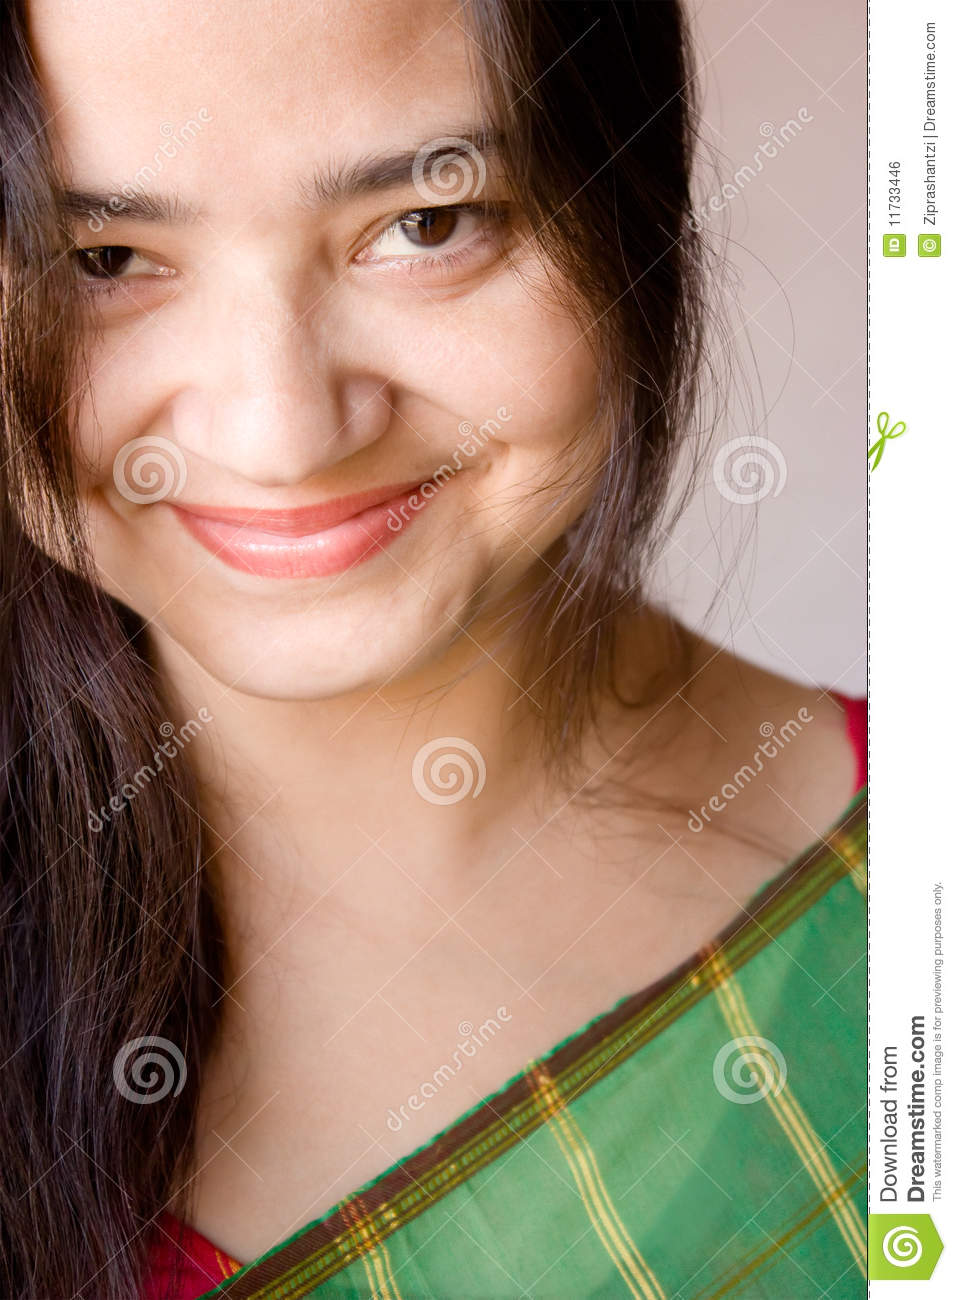 Shy Smile Of Beautiful Indian Women Royalty Free Stock Image   Image